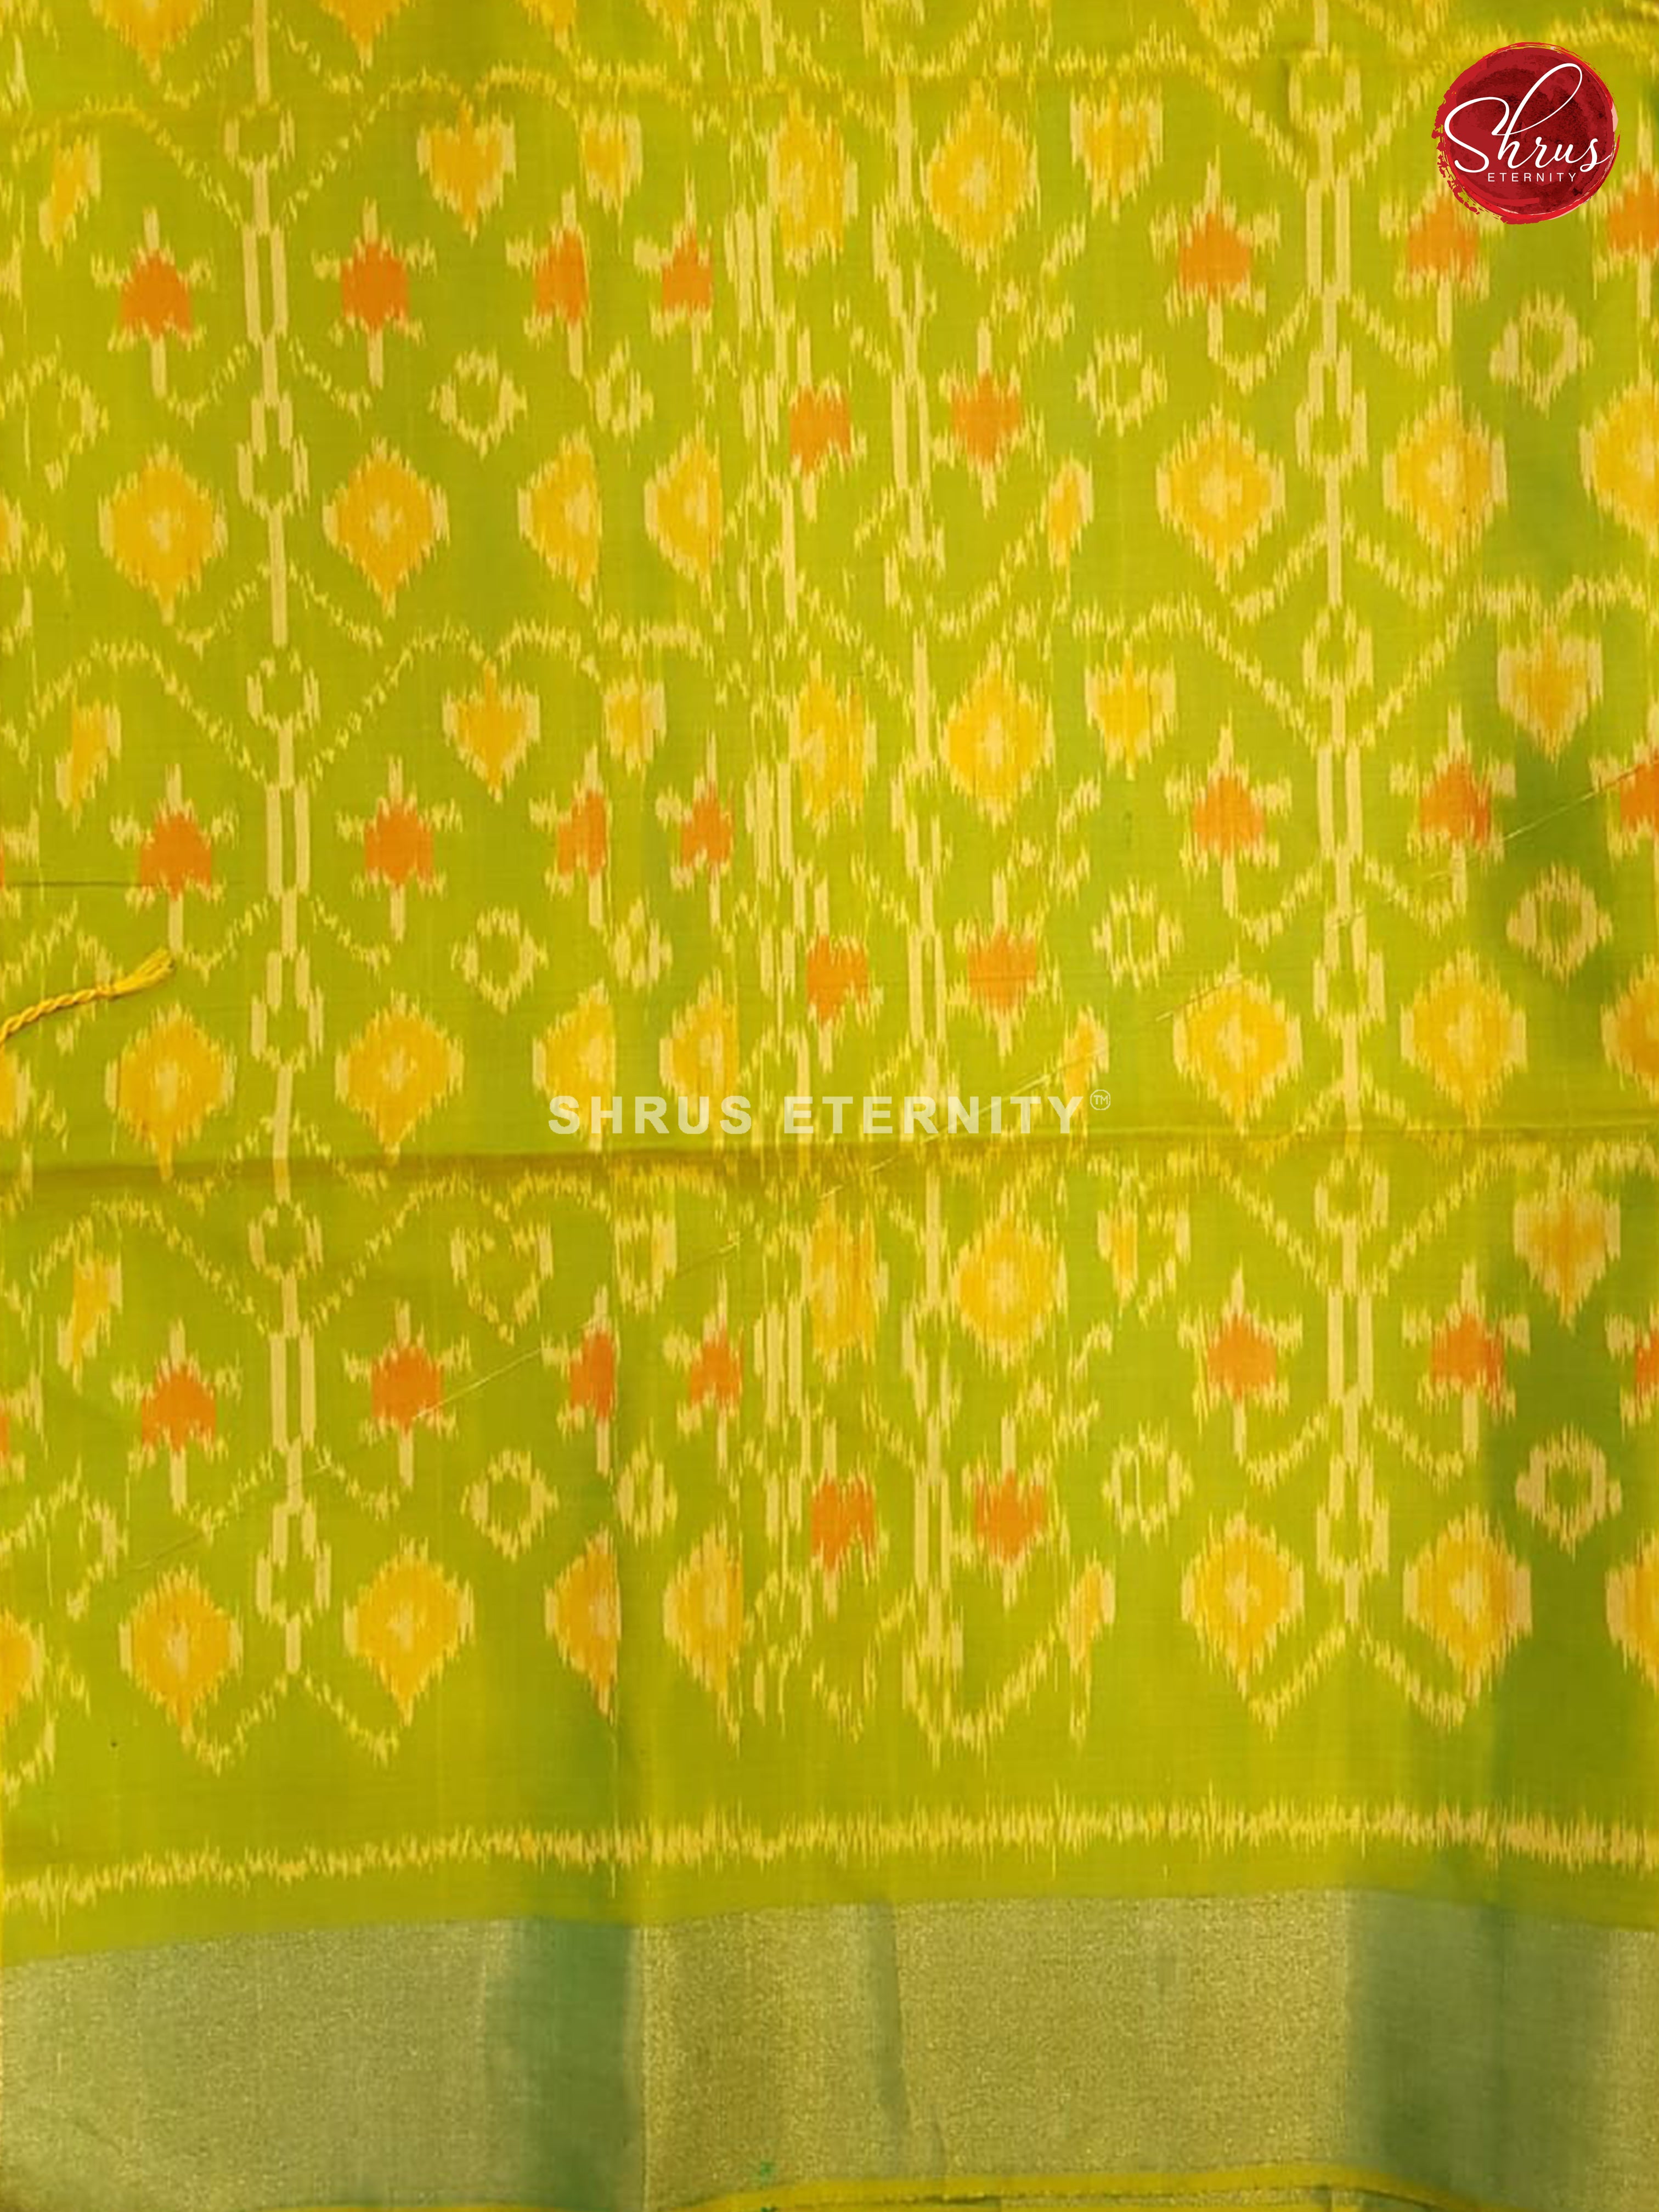 Black & Parrot Green - Soft Silk - Shop on ShrusEternity.com